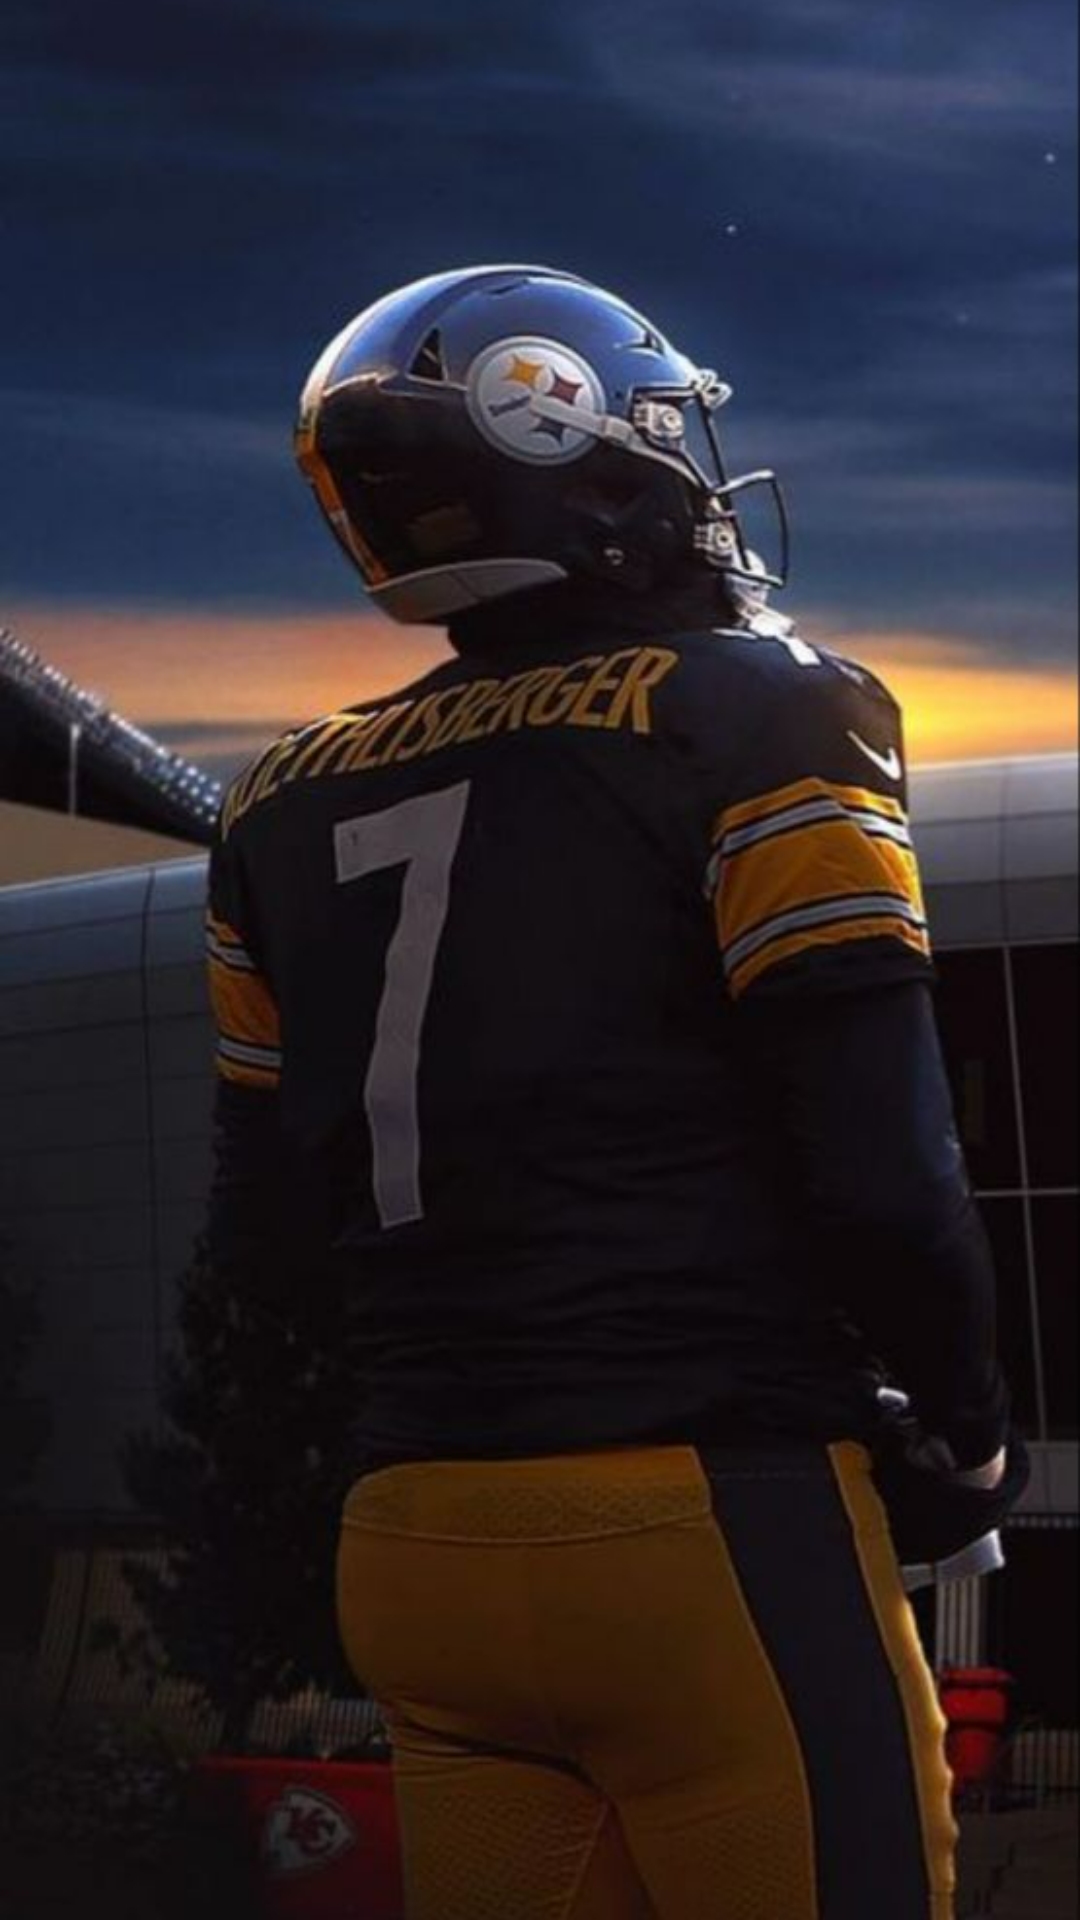 Wallpaper of Steelers